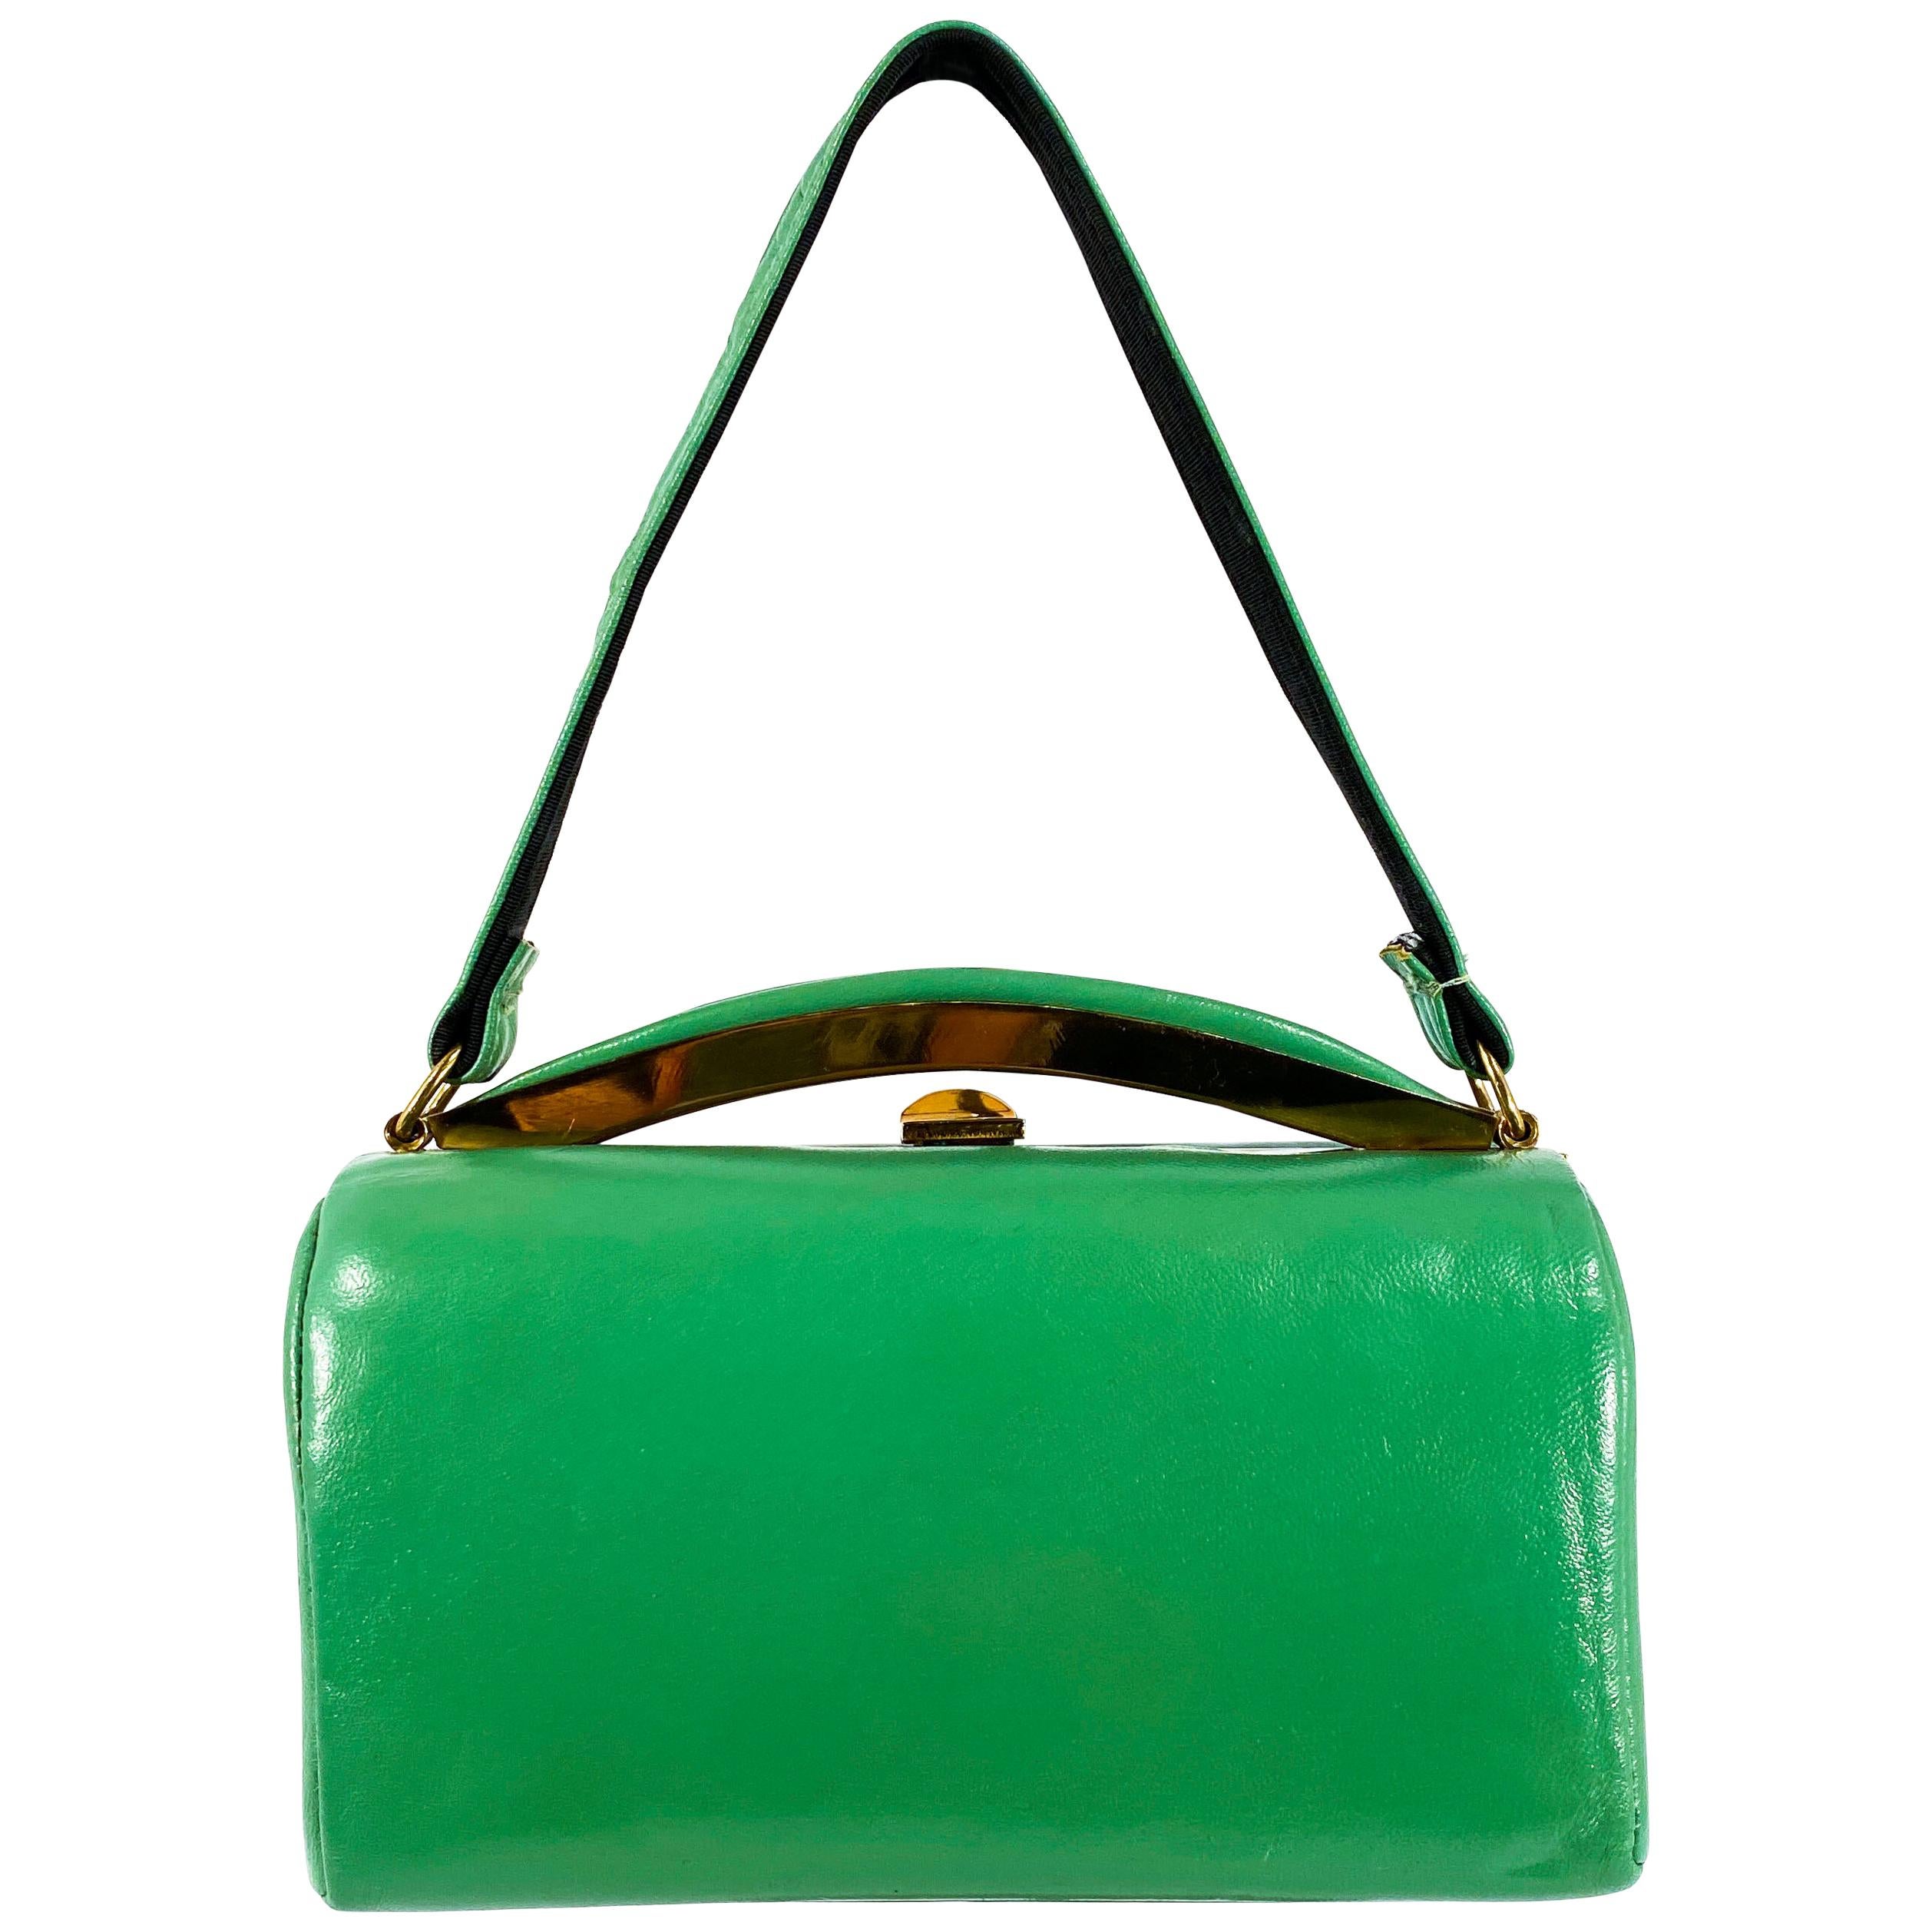 1950s Kelly Green Handbag with Brass Hardware